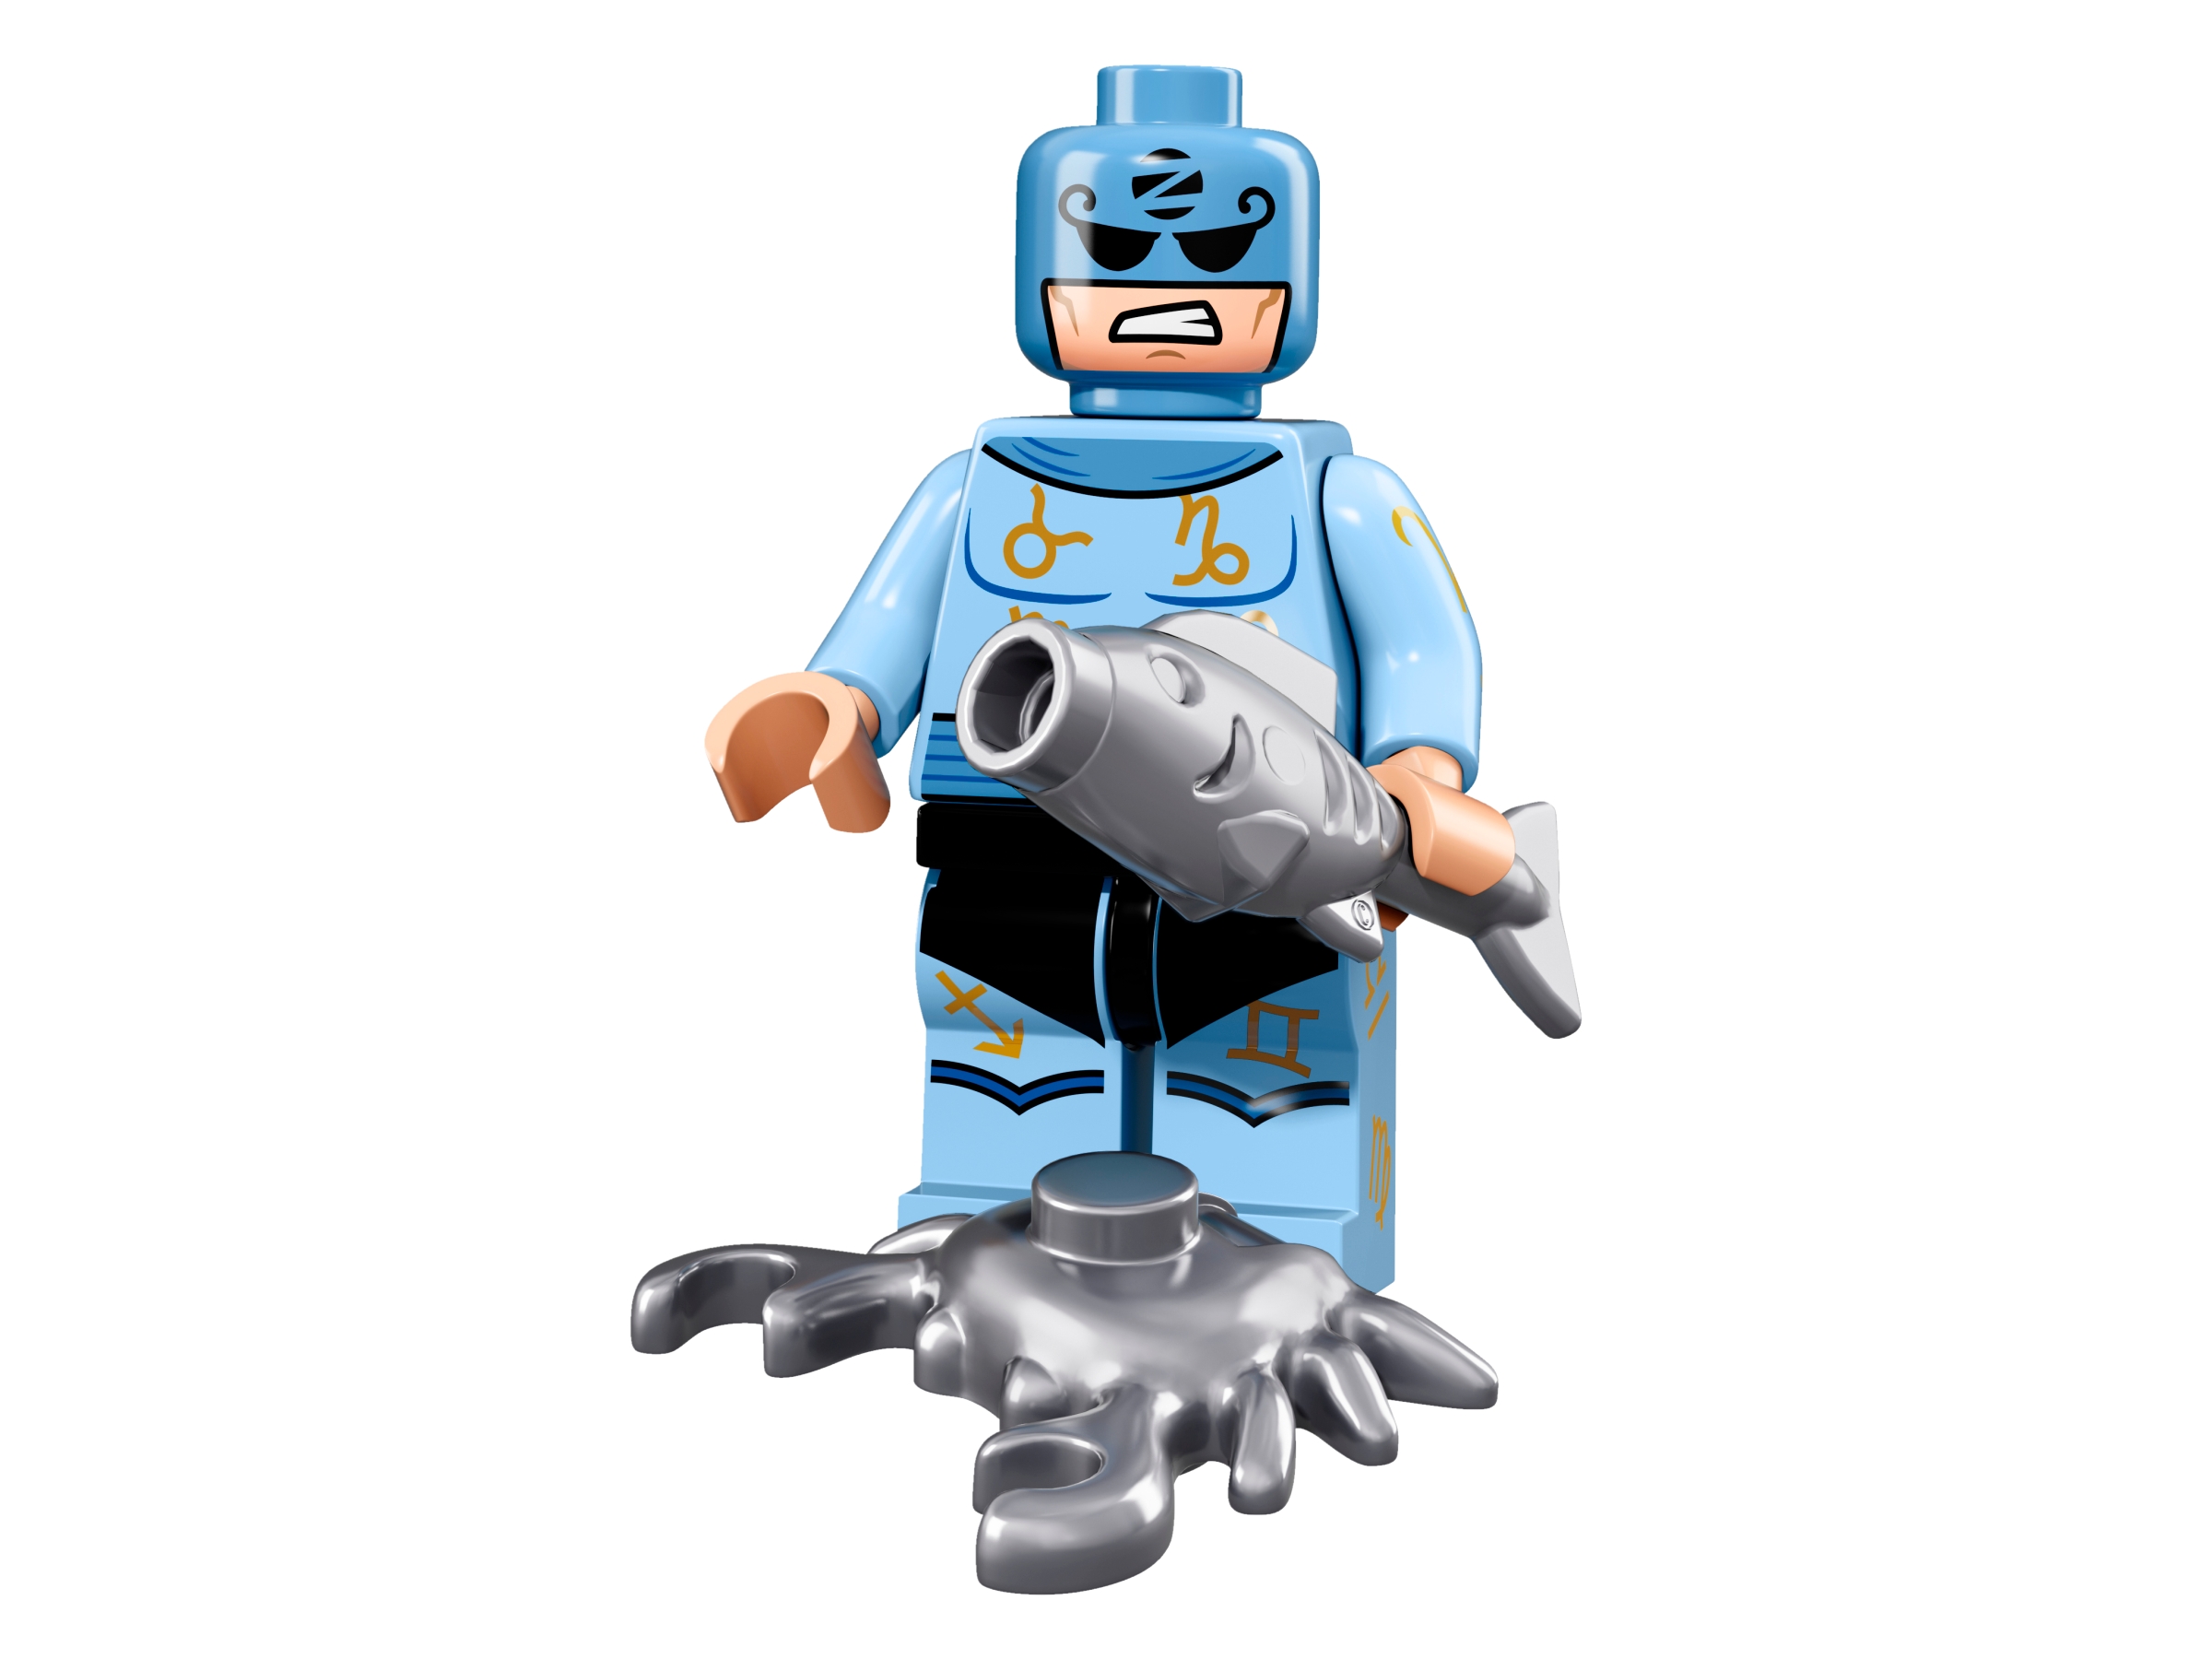 lego batman movie minifigures series 61017